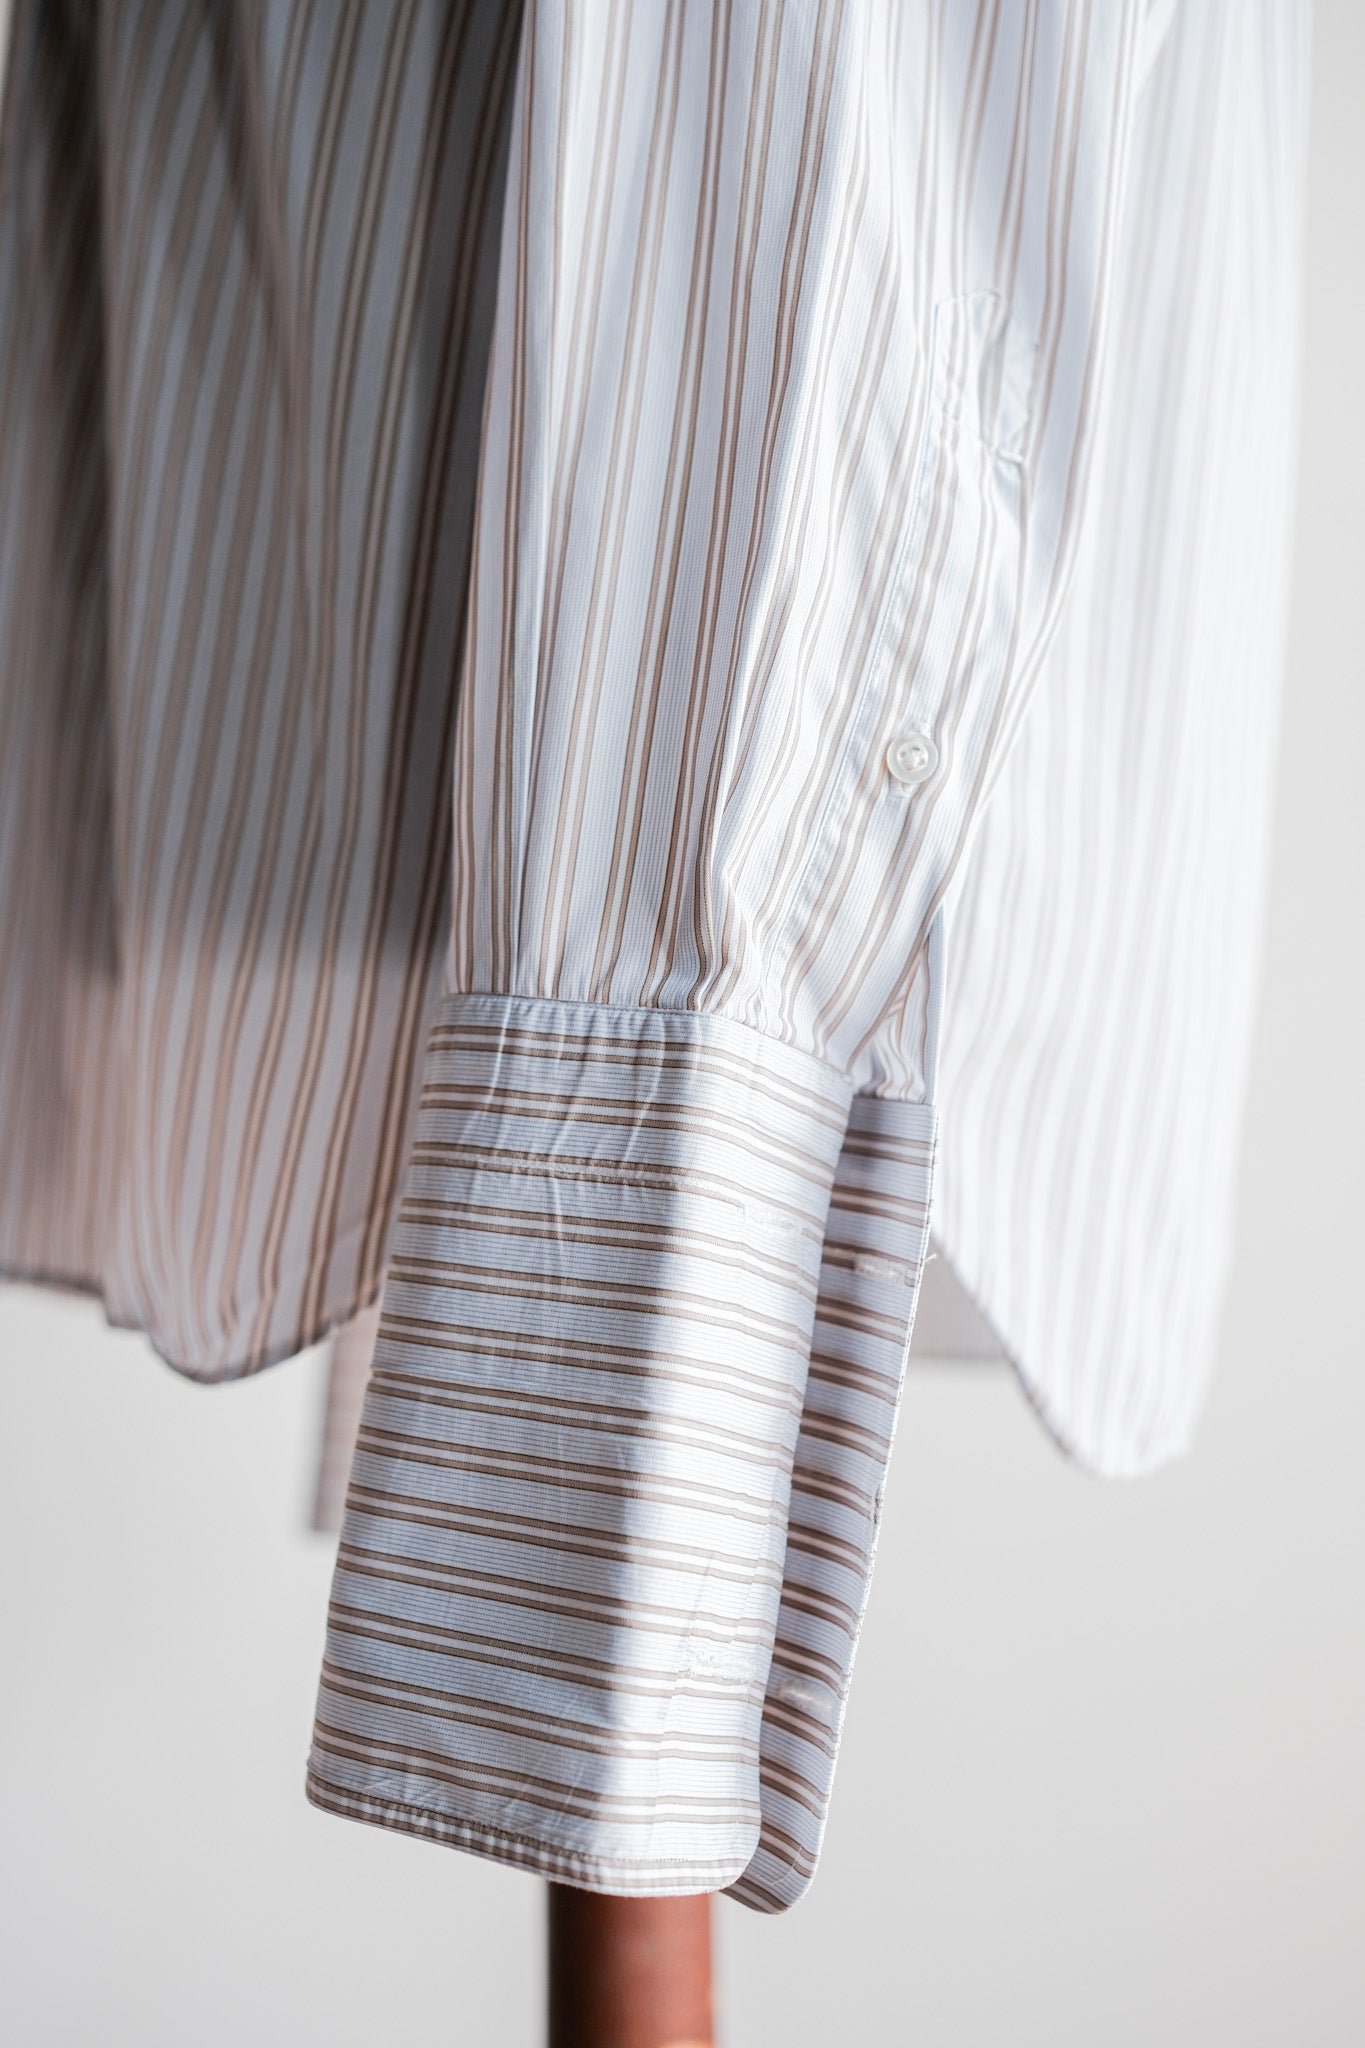 【~00's】Old ARNYS PARIS Cotton Striped Dress Shirt Size.40